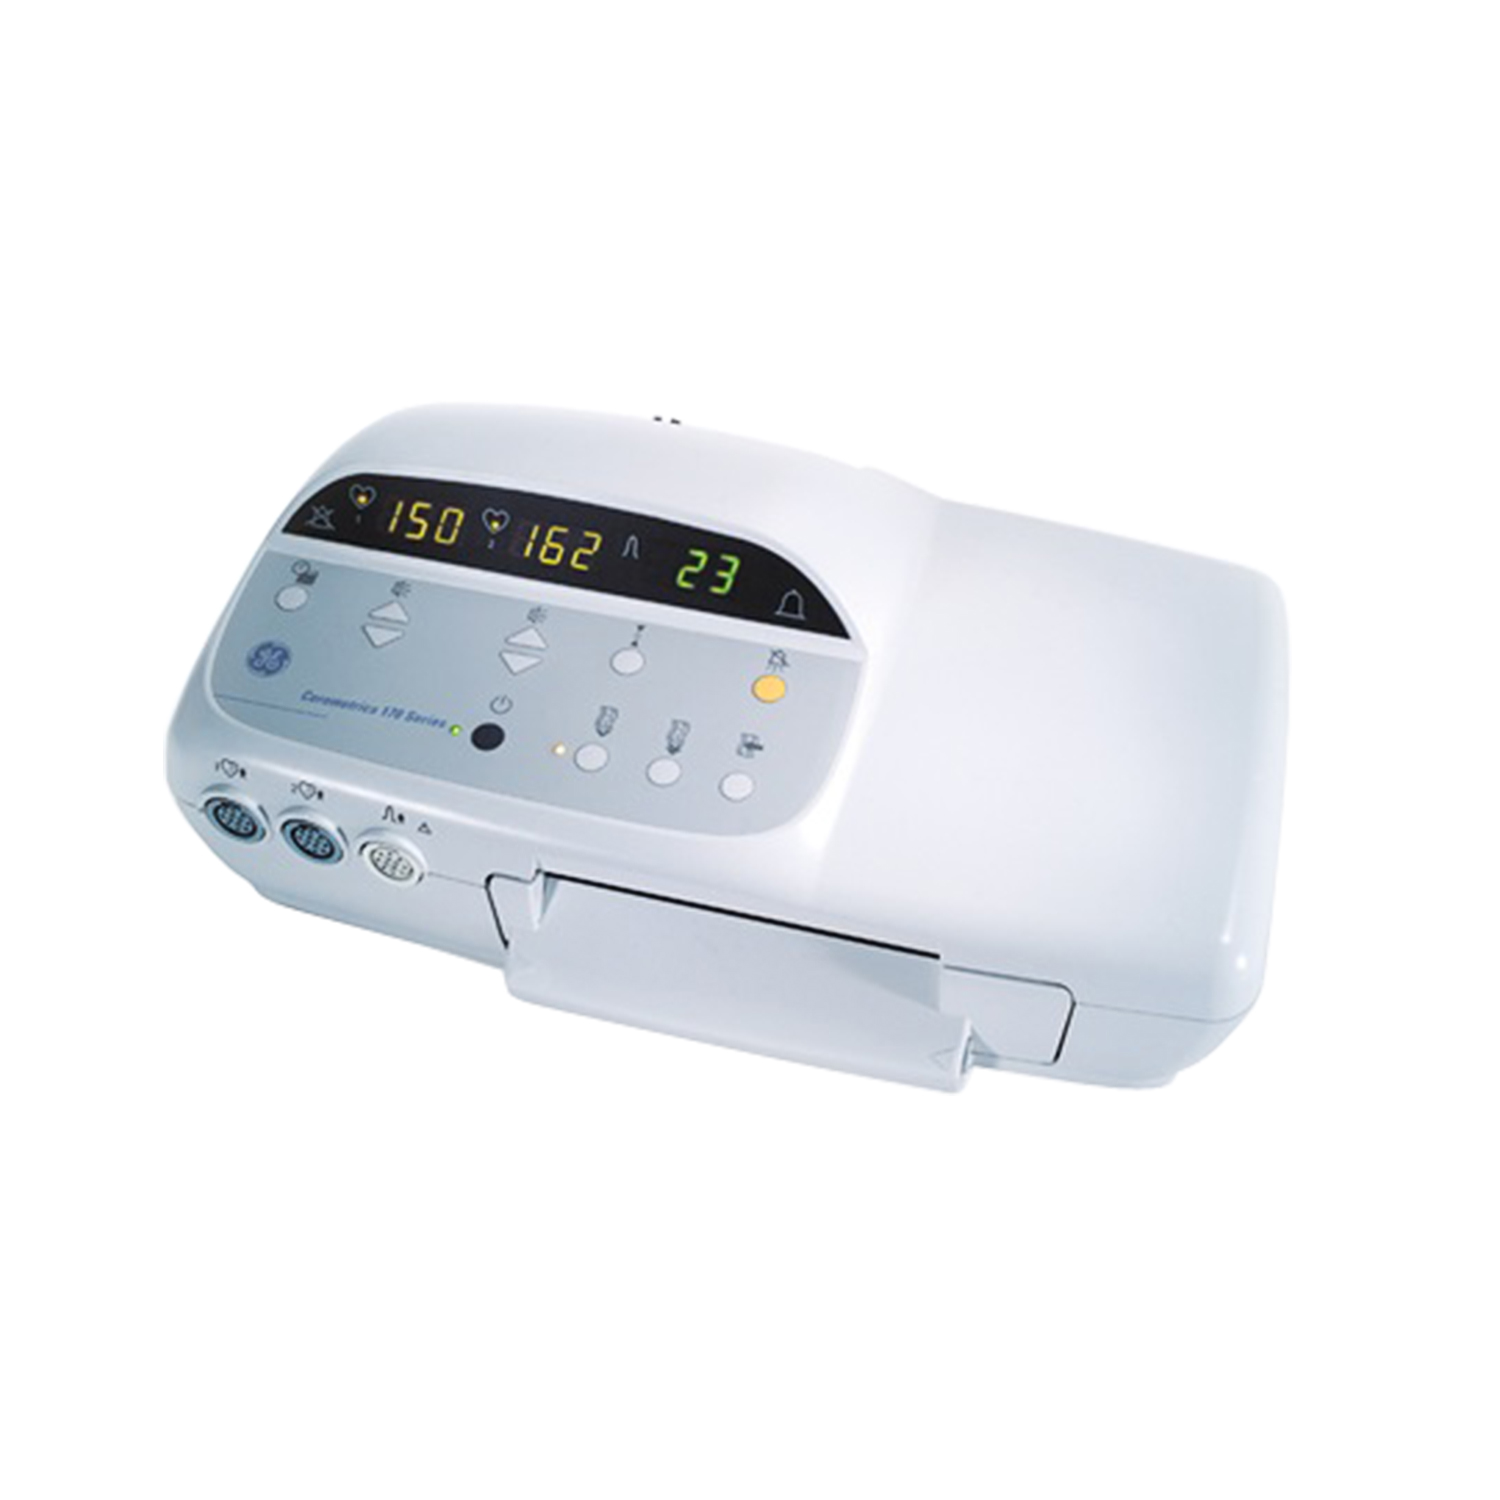 GE Corometrics 173 Fetal Monitor